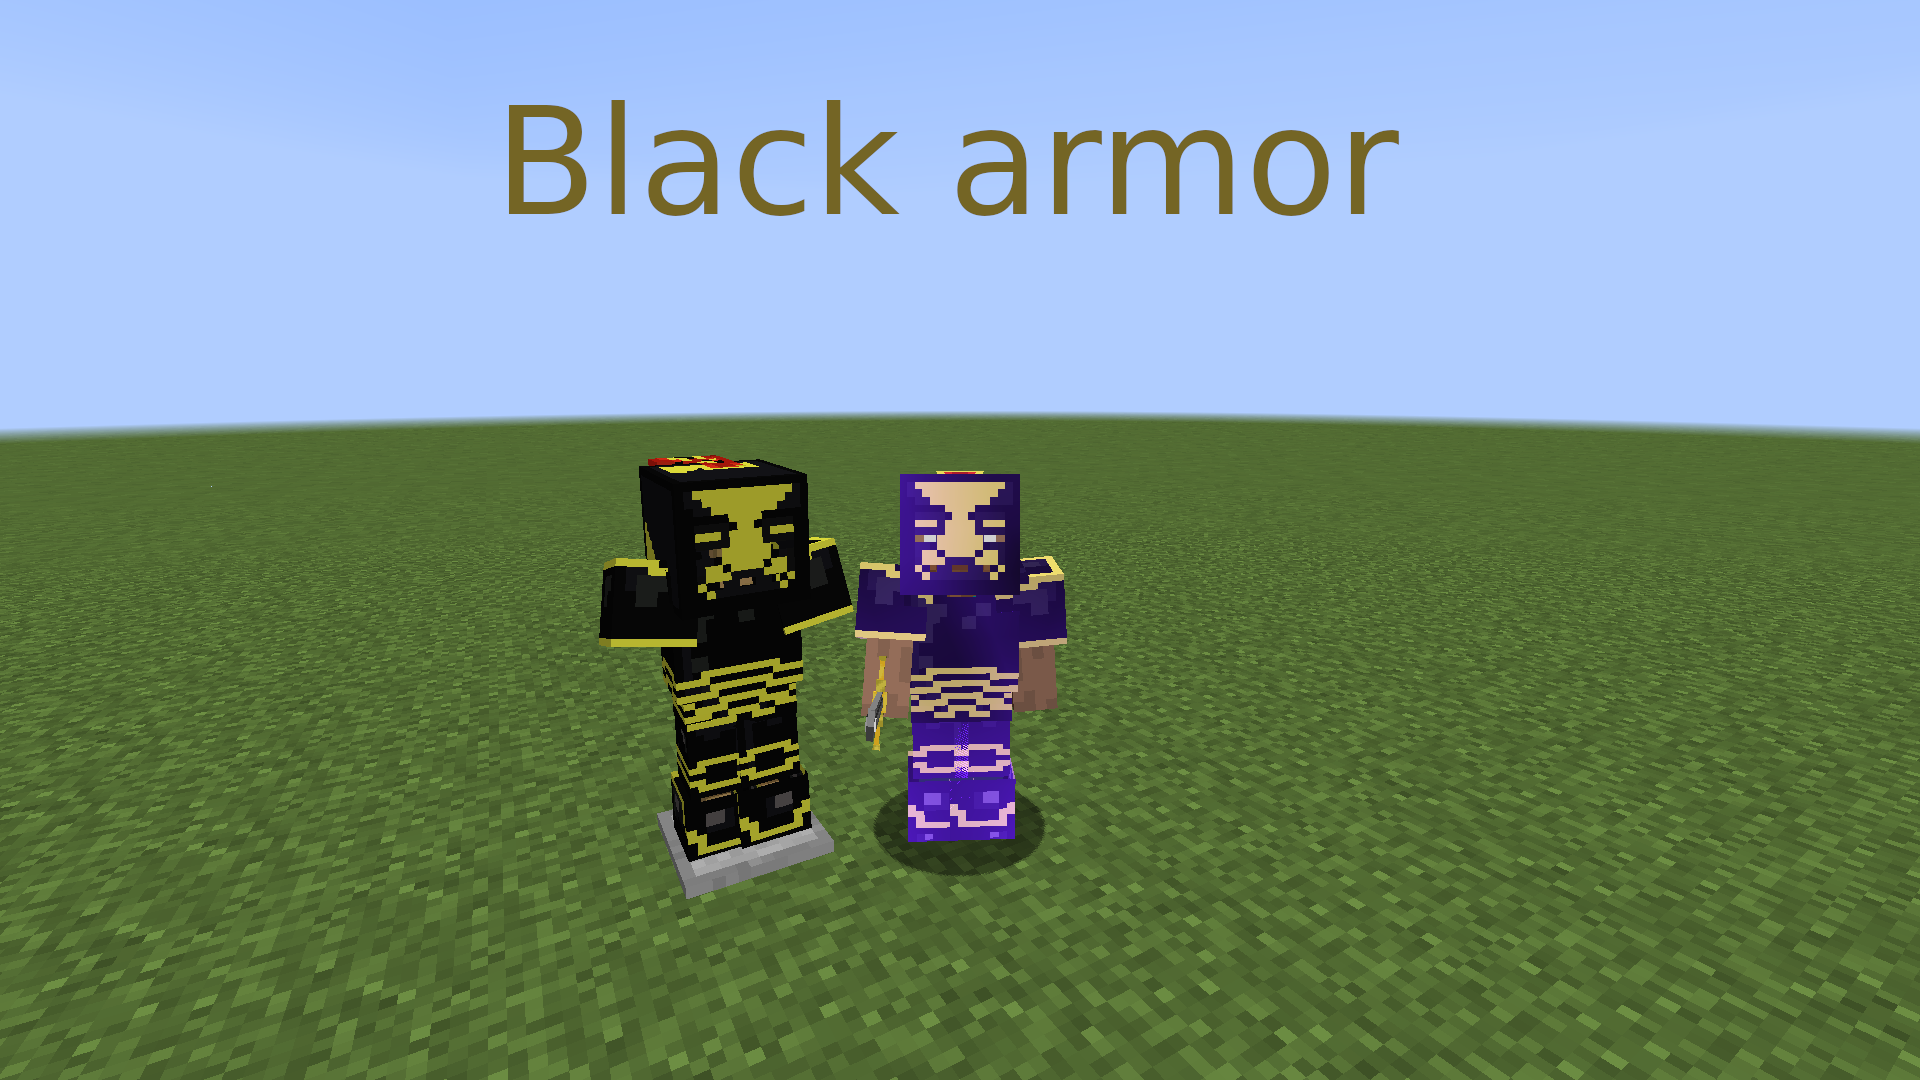 Black armor